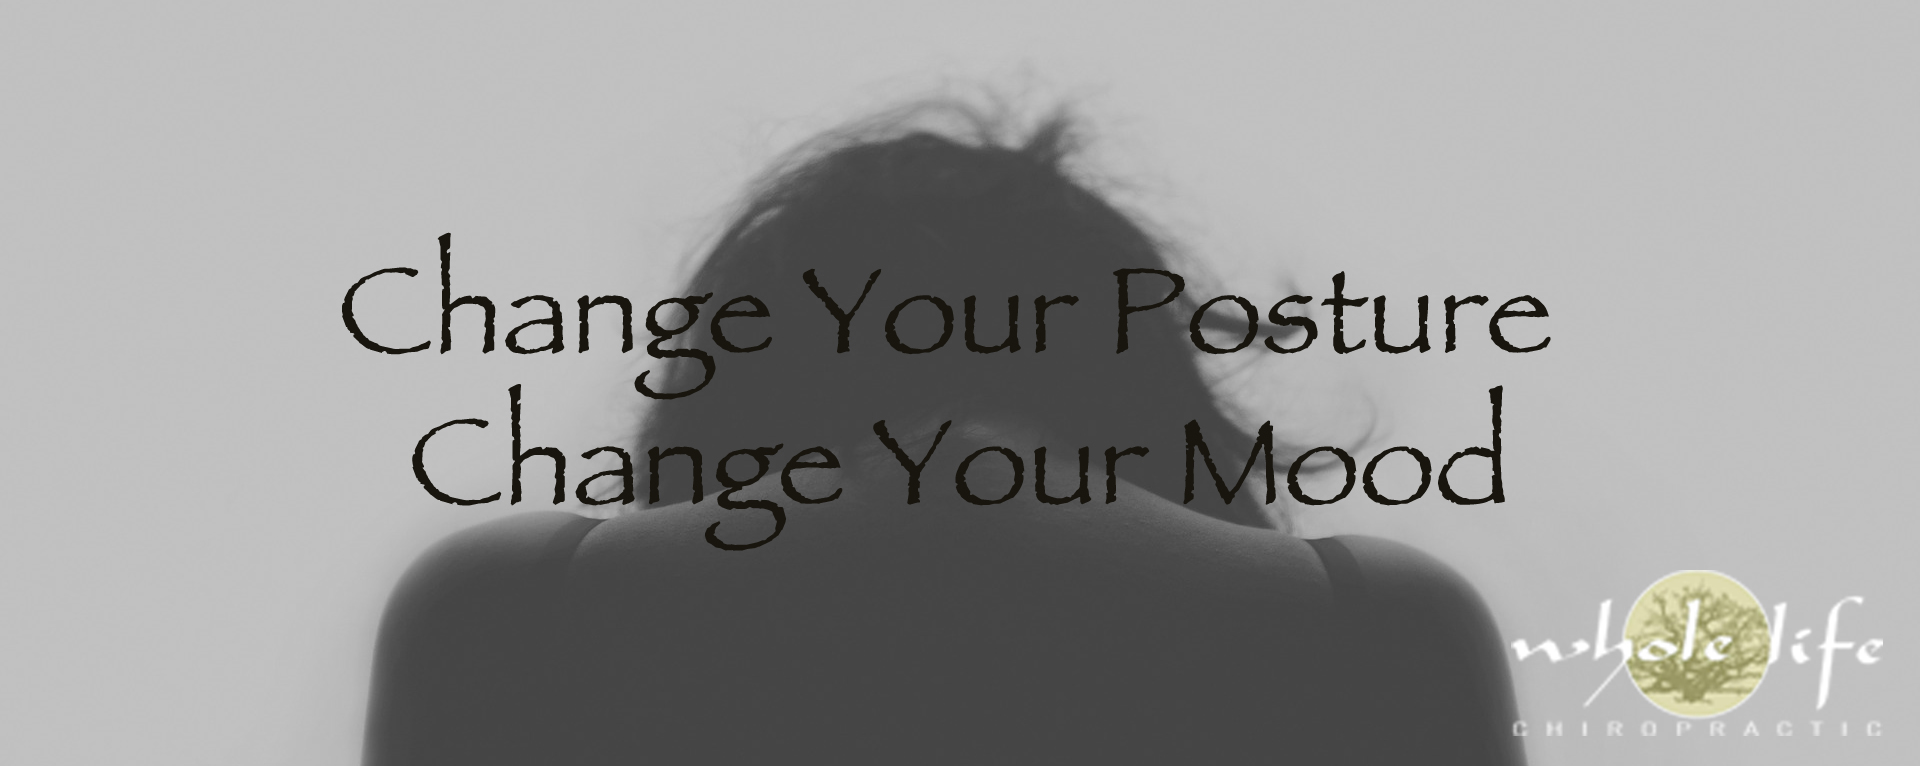 Change Your Posture